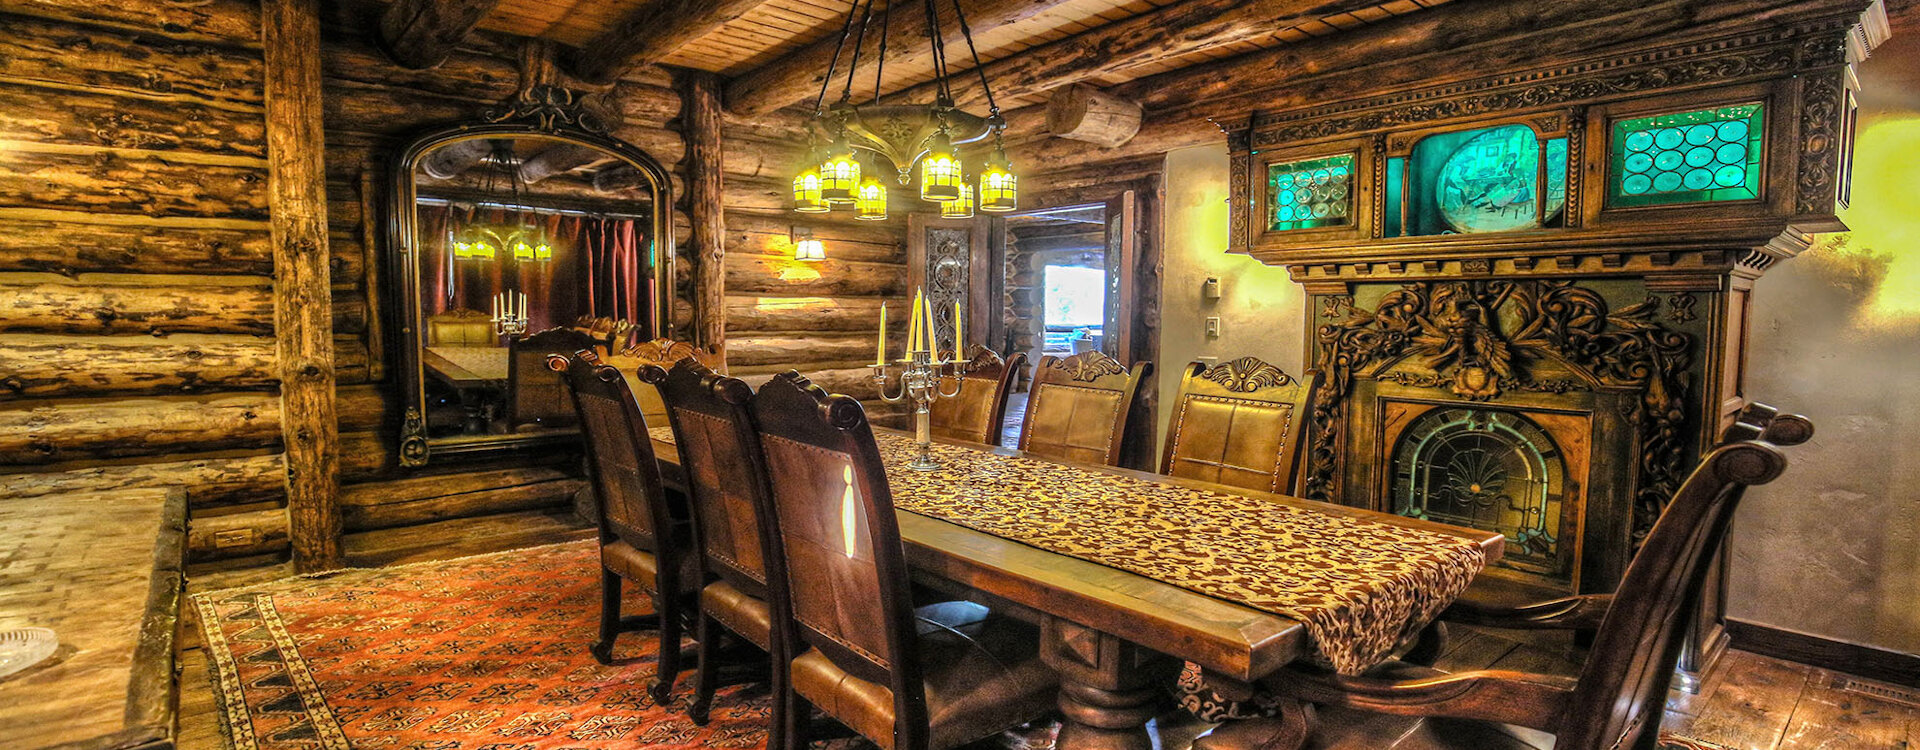 16-telluride-castlewood-dining-room